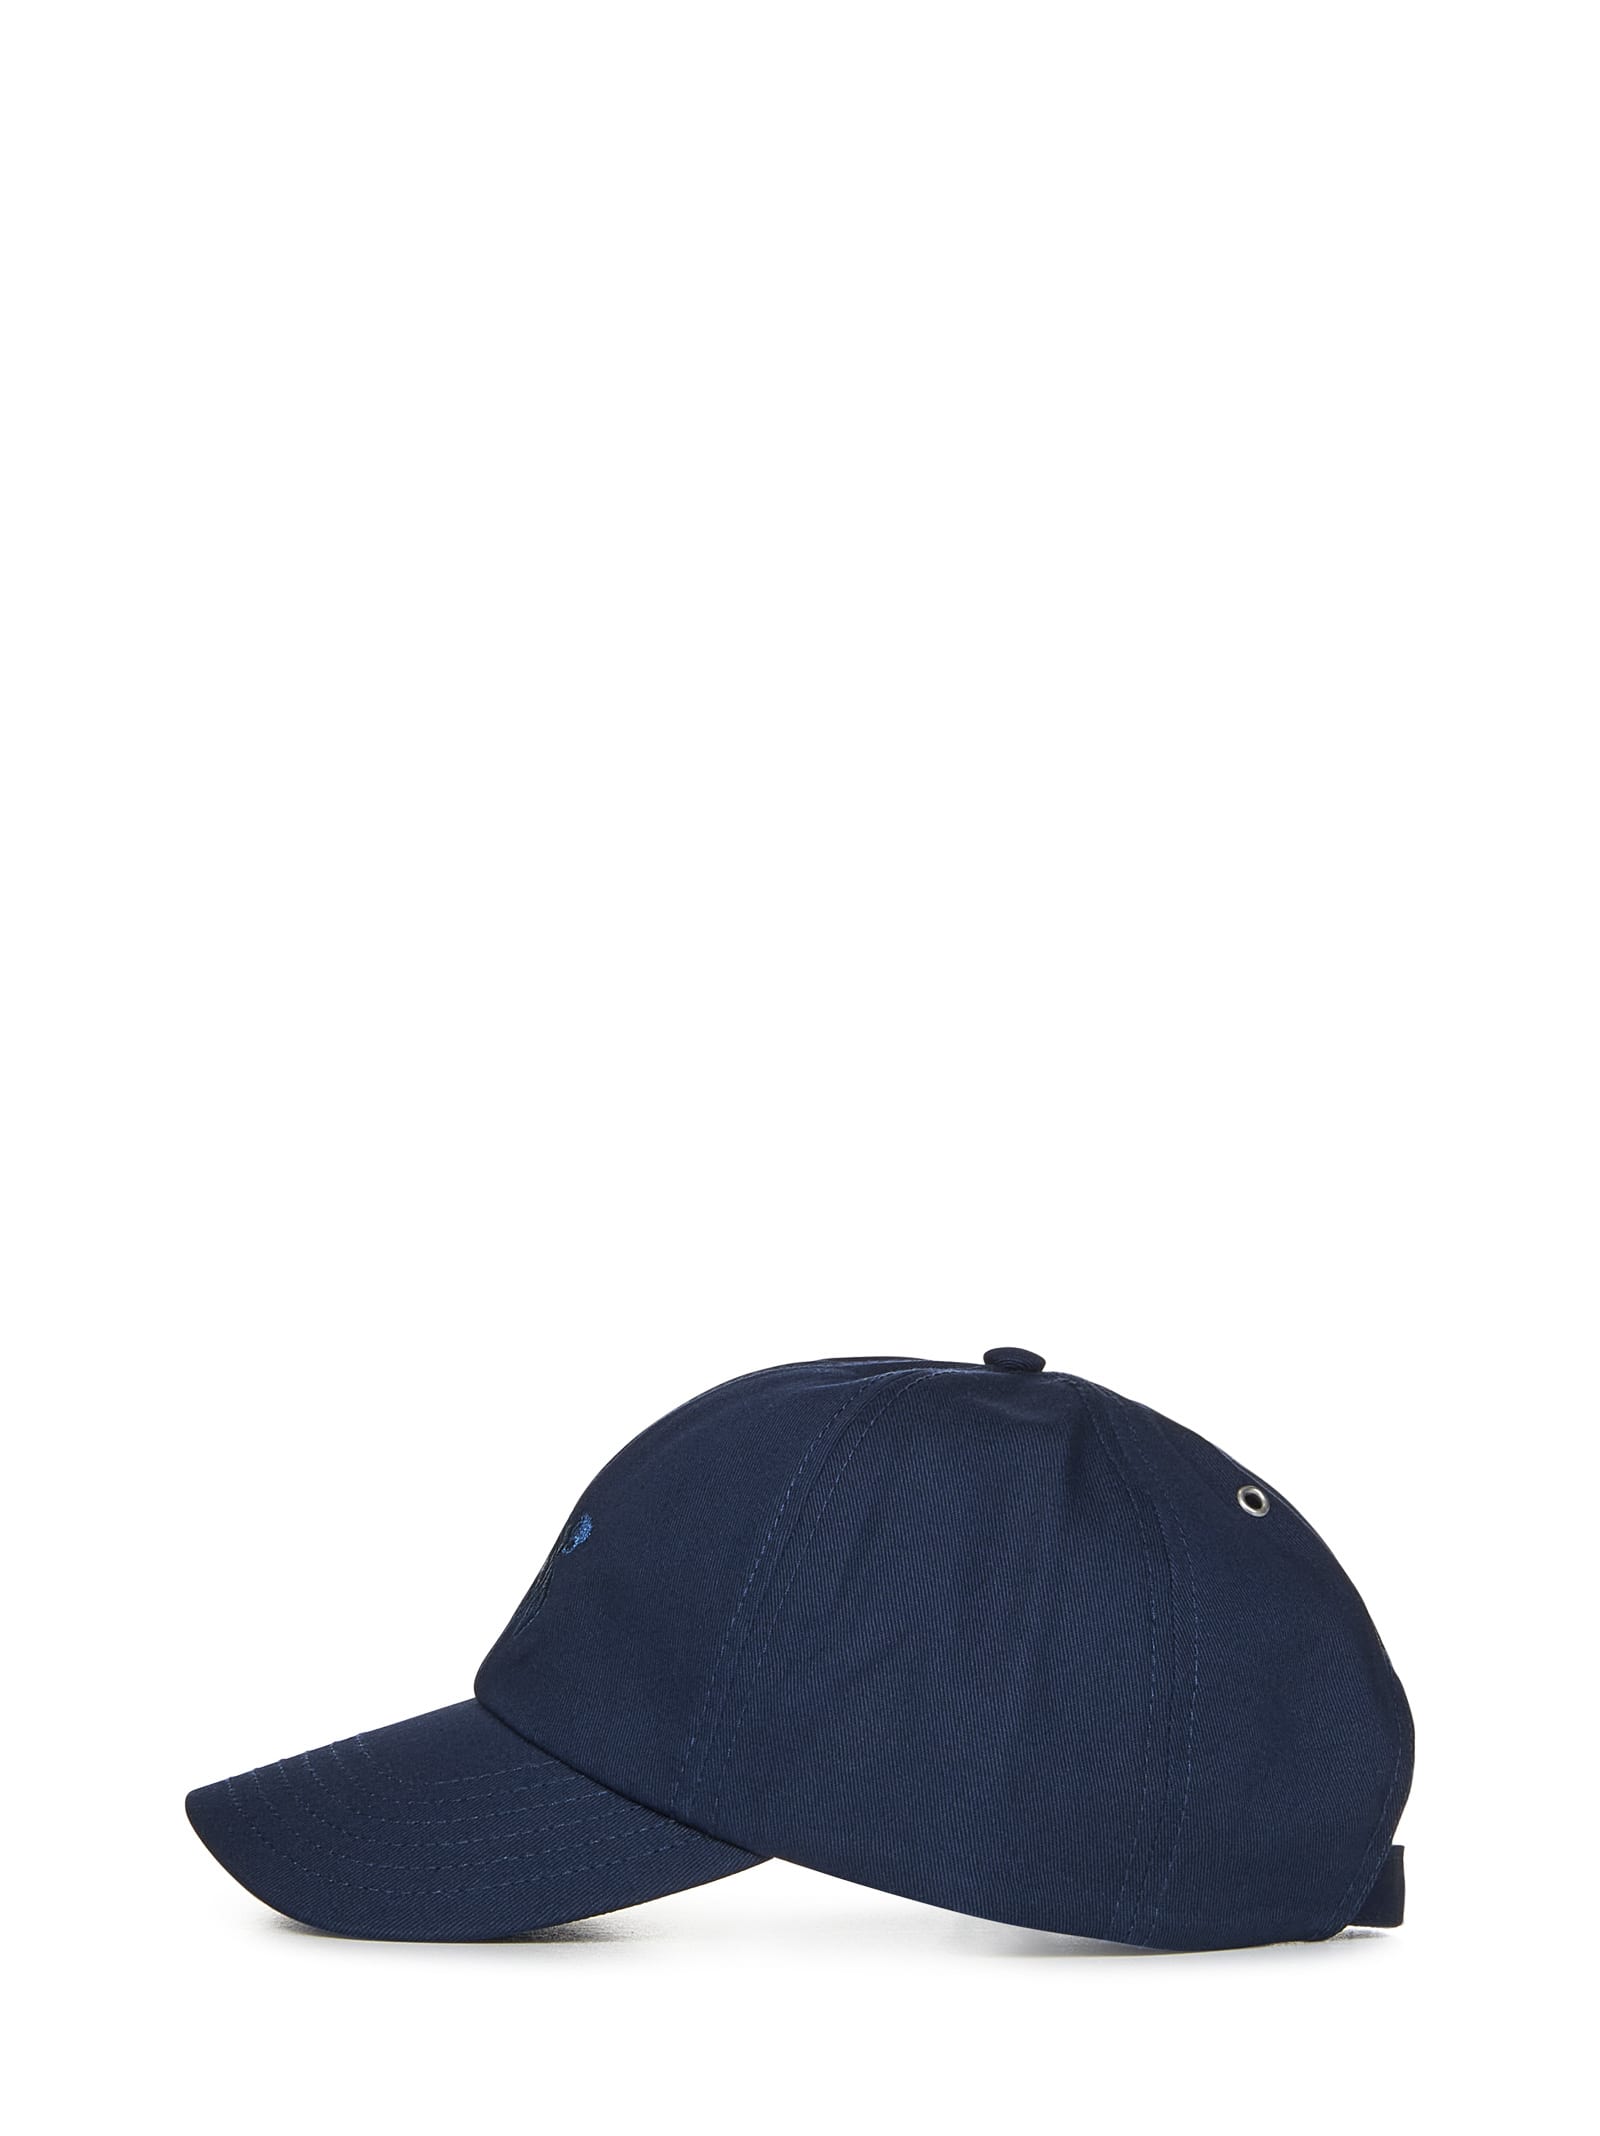 Shop Vilebrequin Hat In Blu Marino